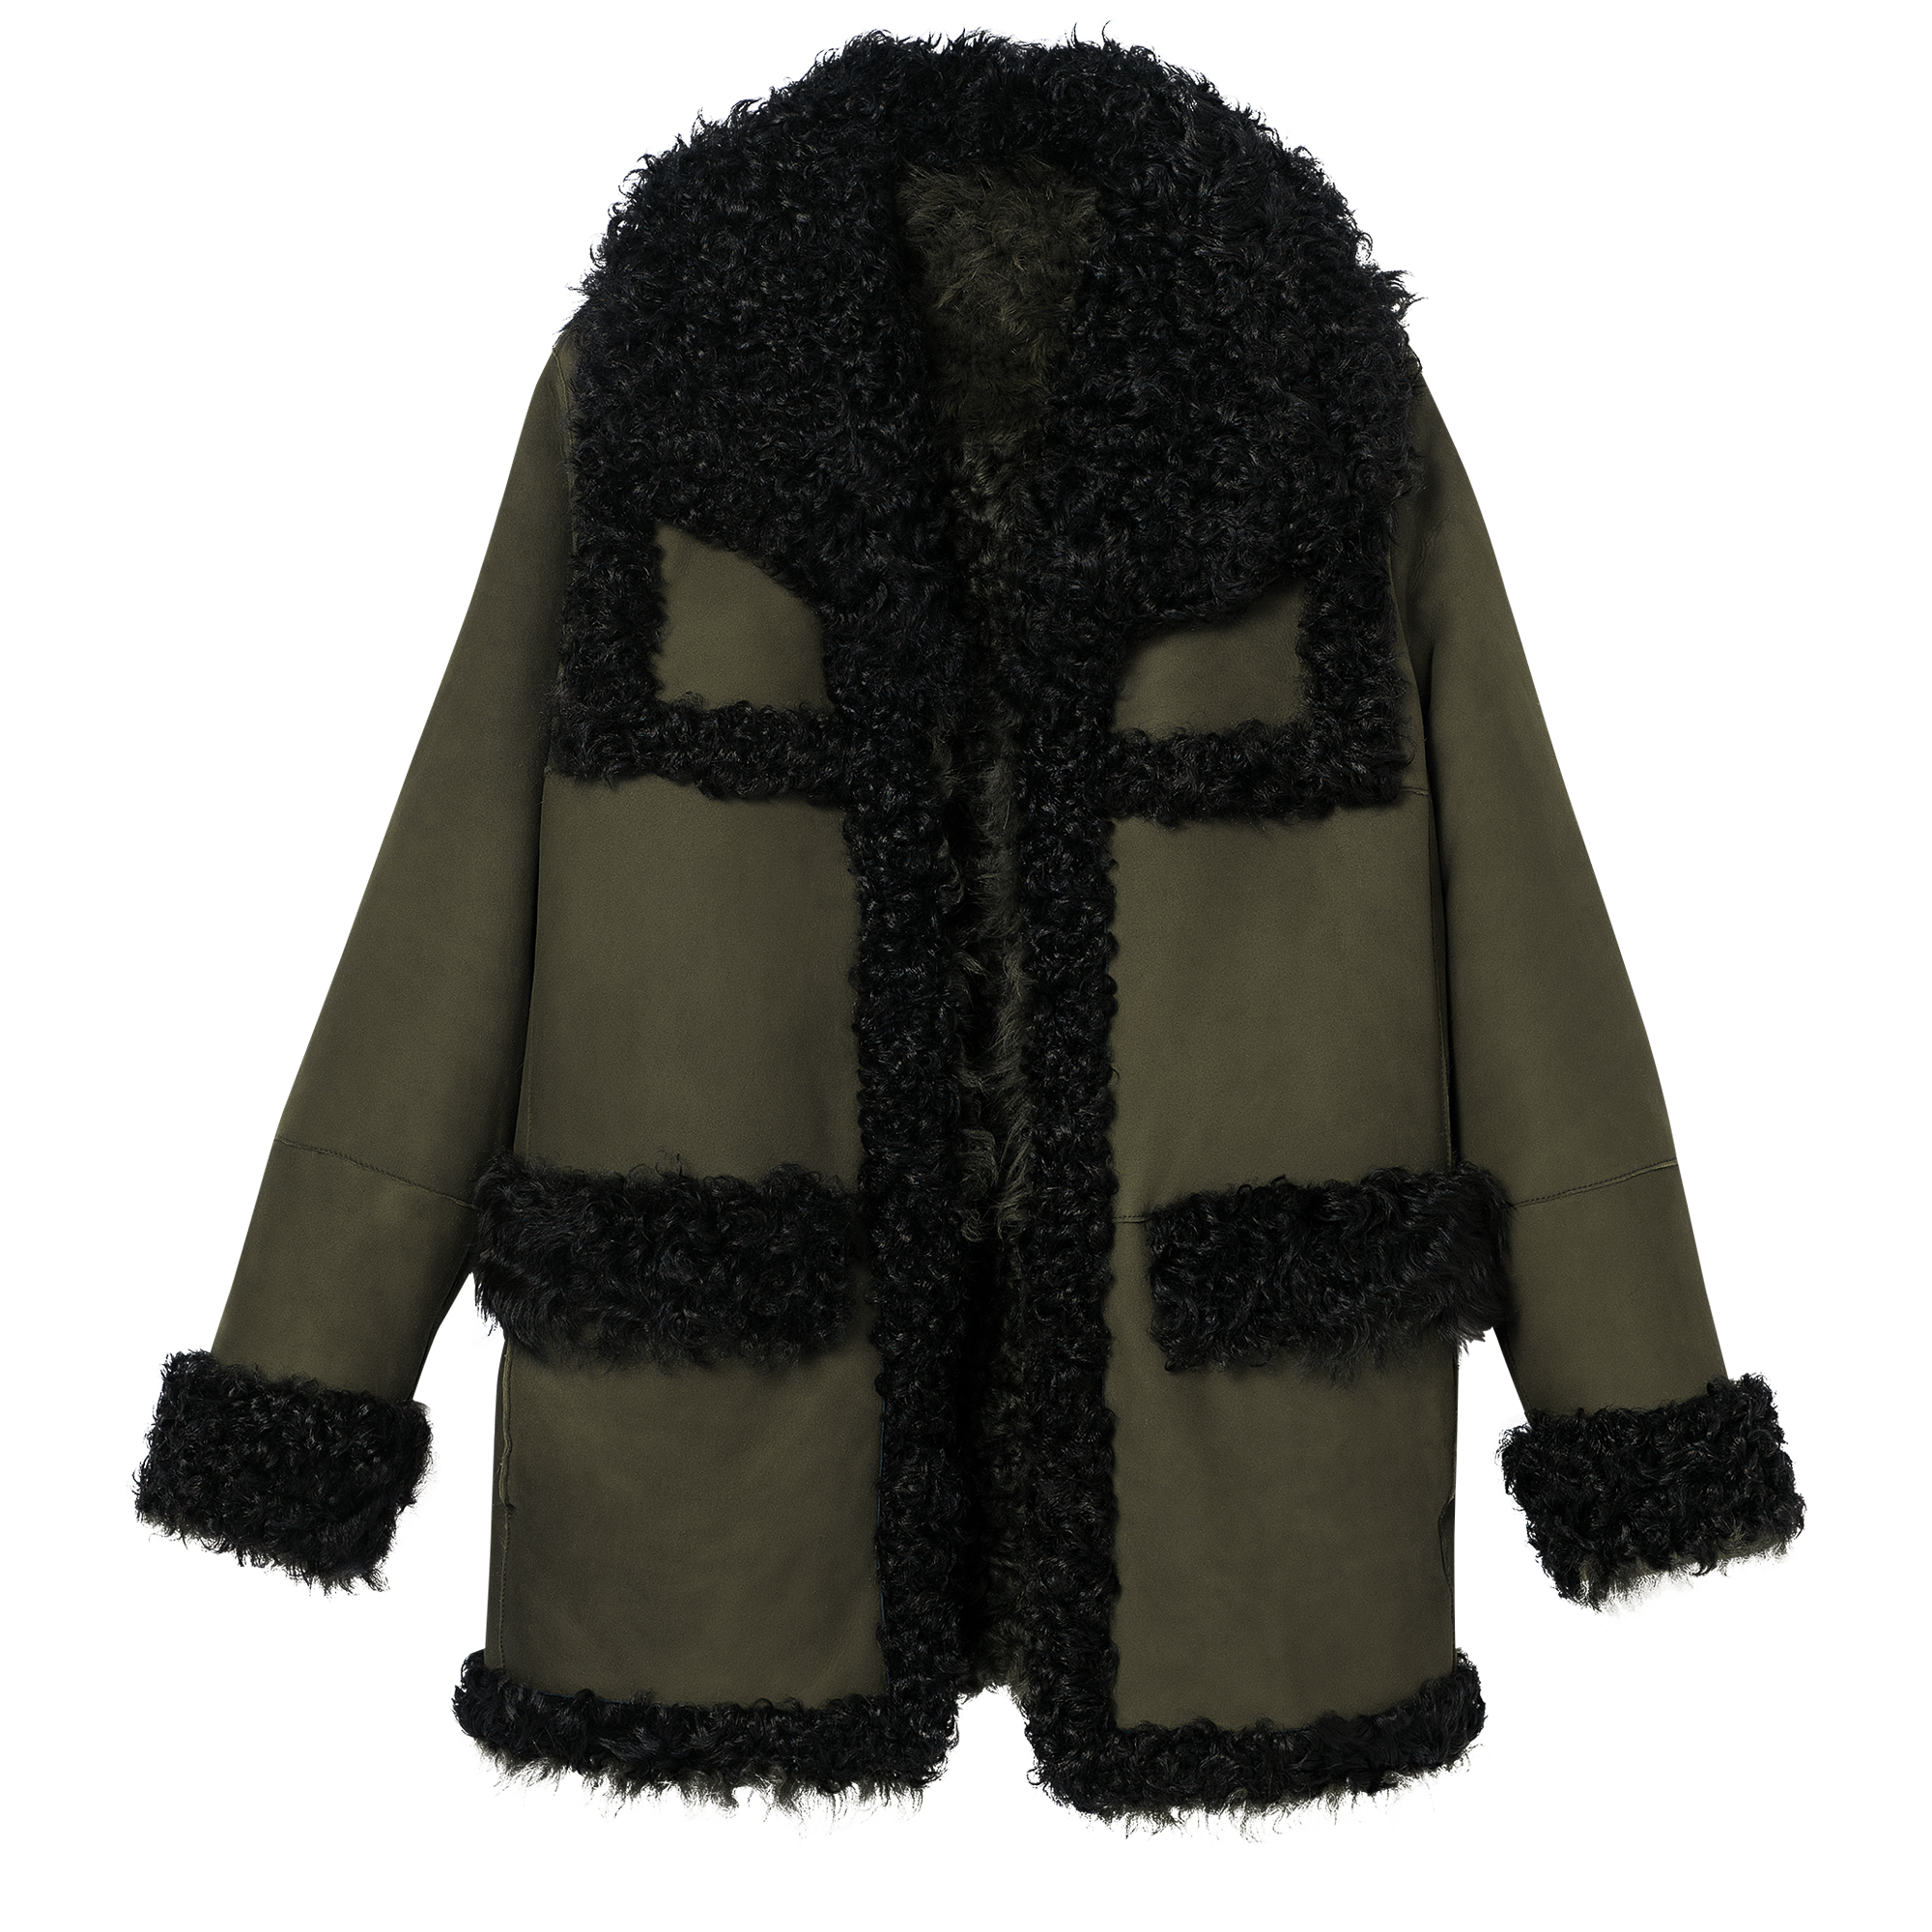 longchamp coat